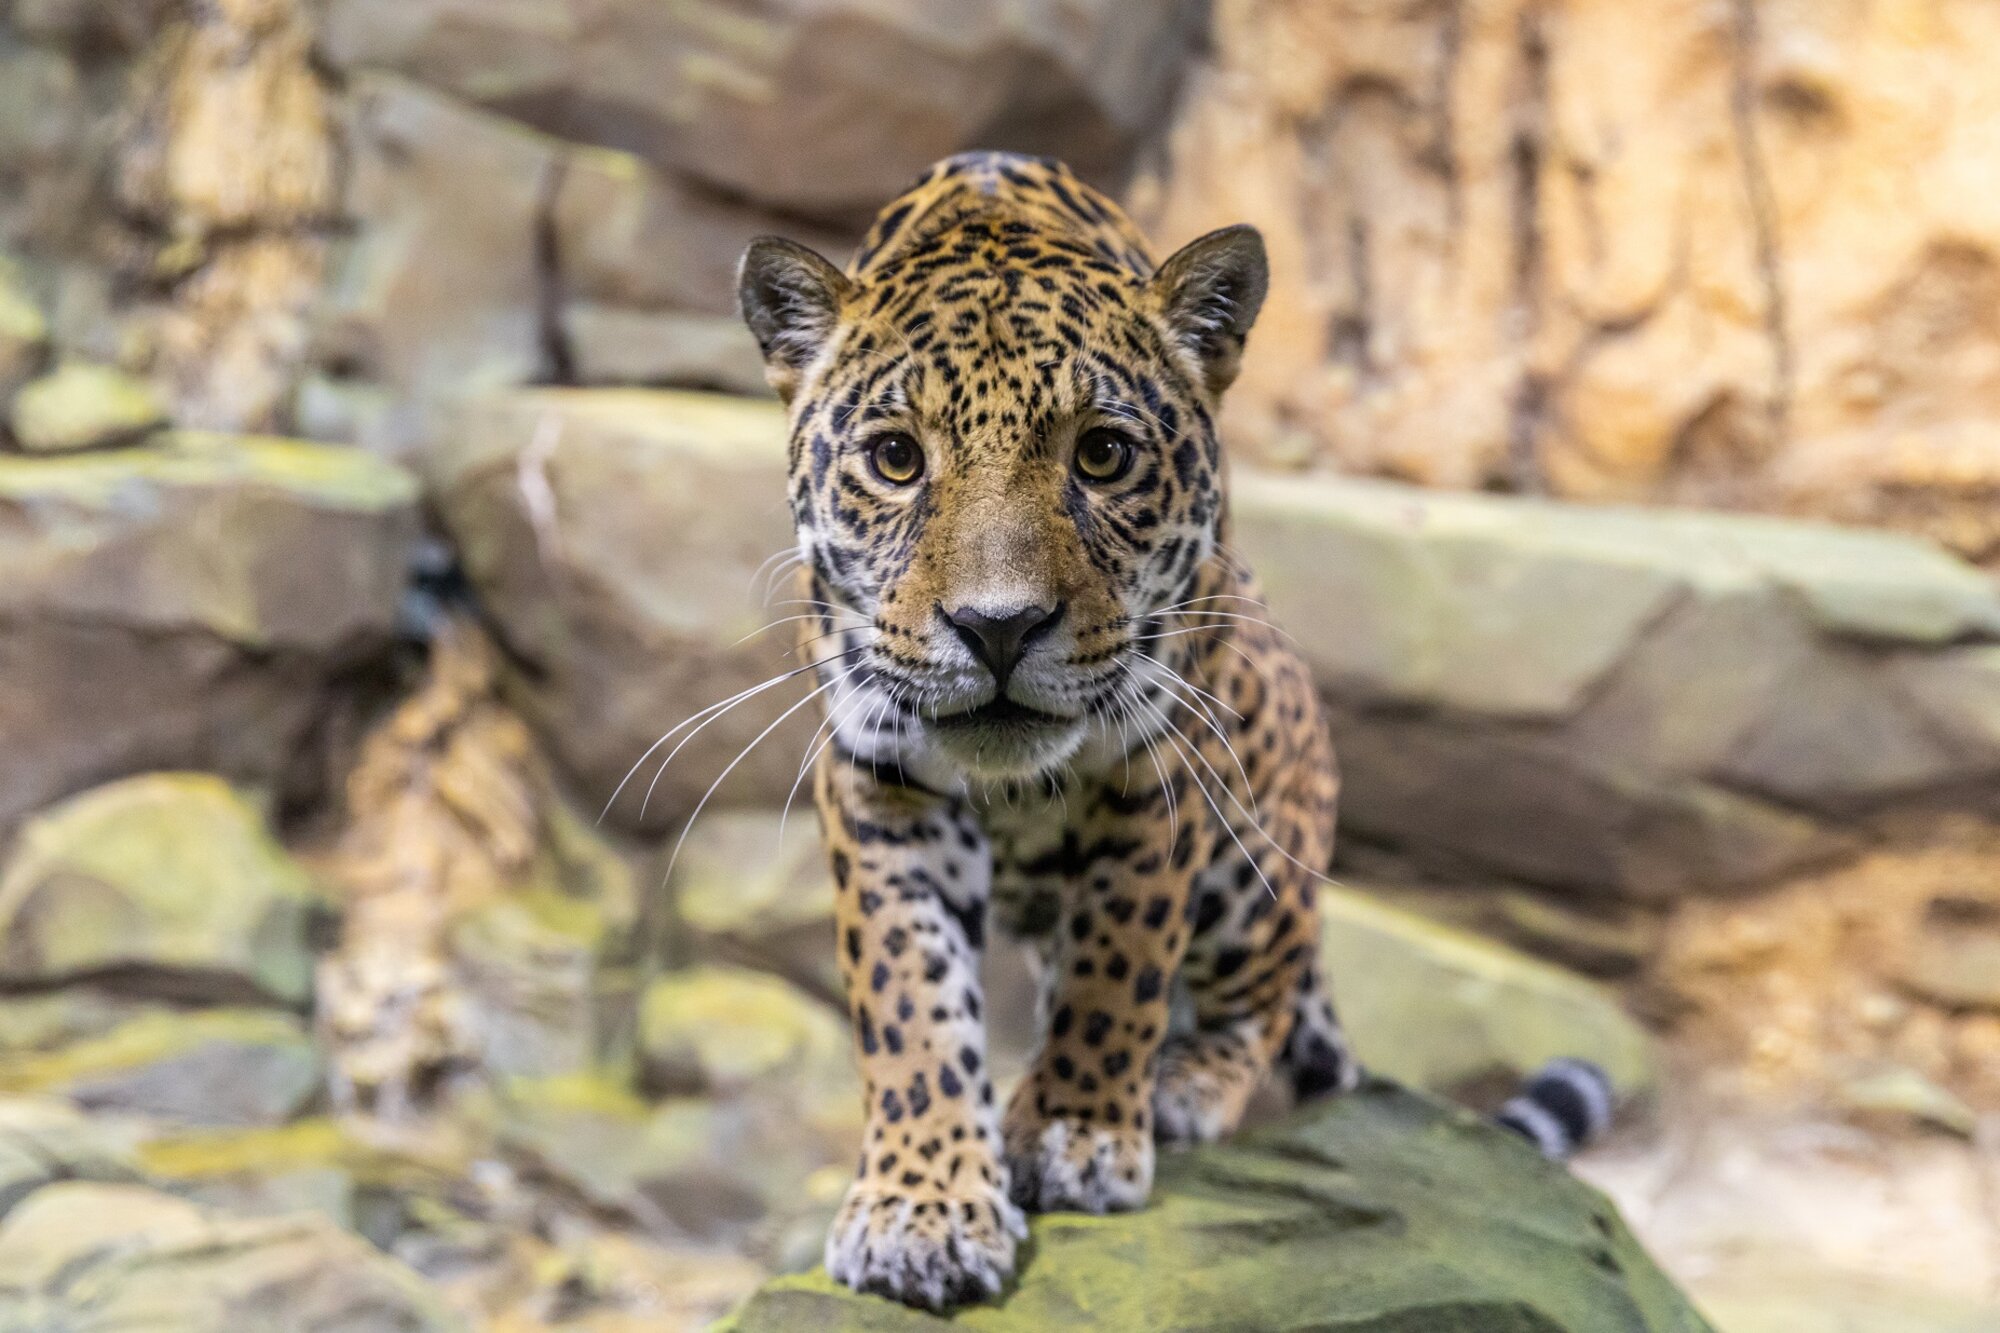 New predator experience opens at Zoo Berlin – Zoo Berlin